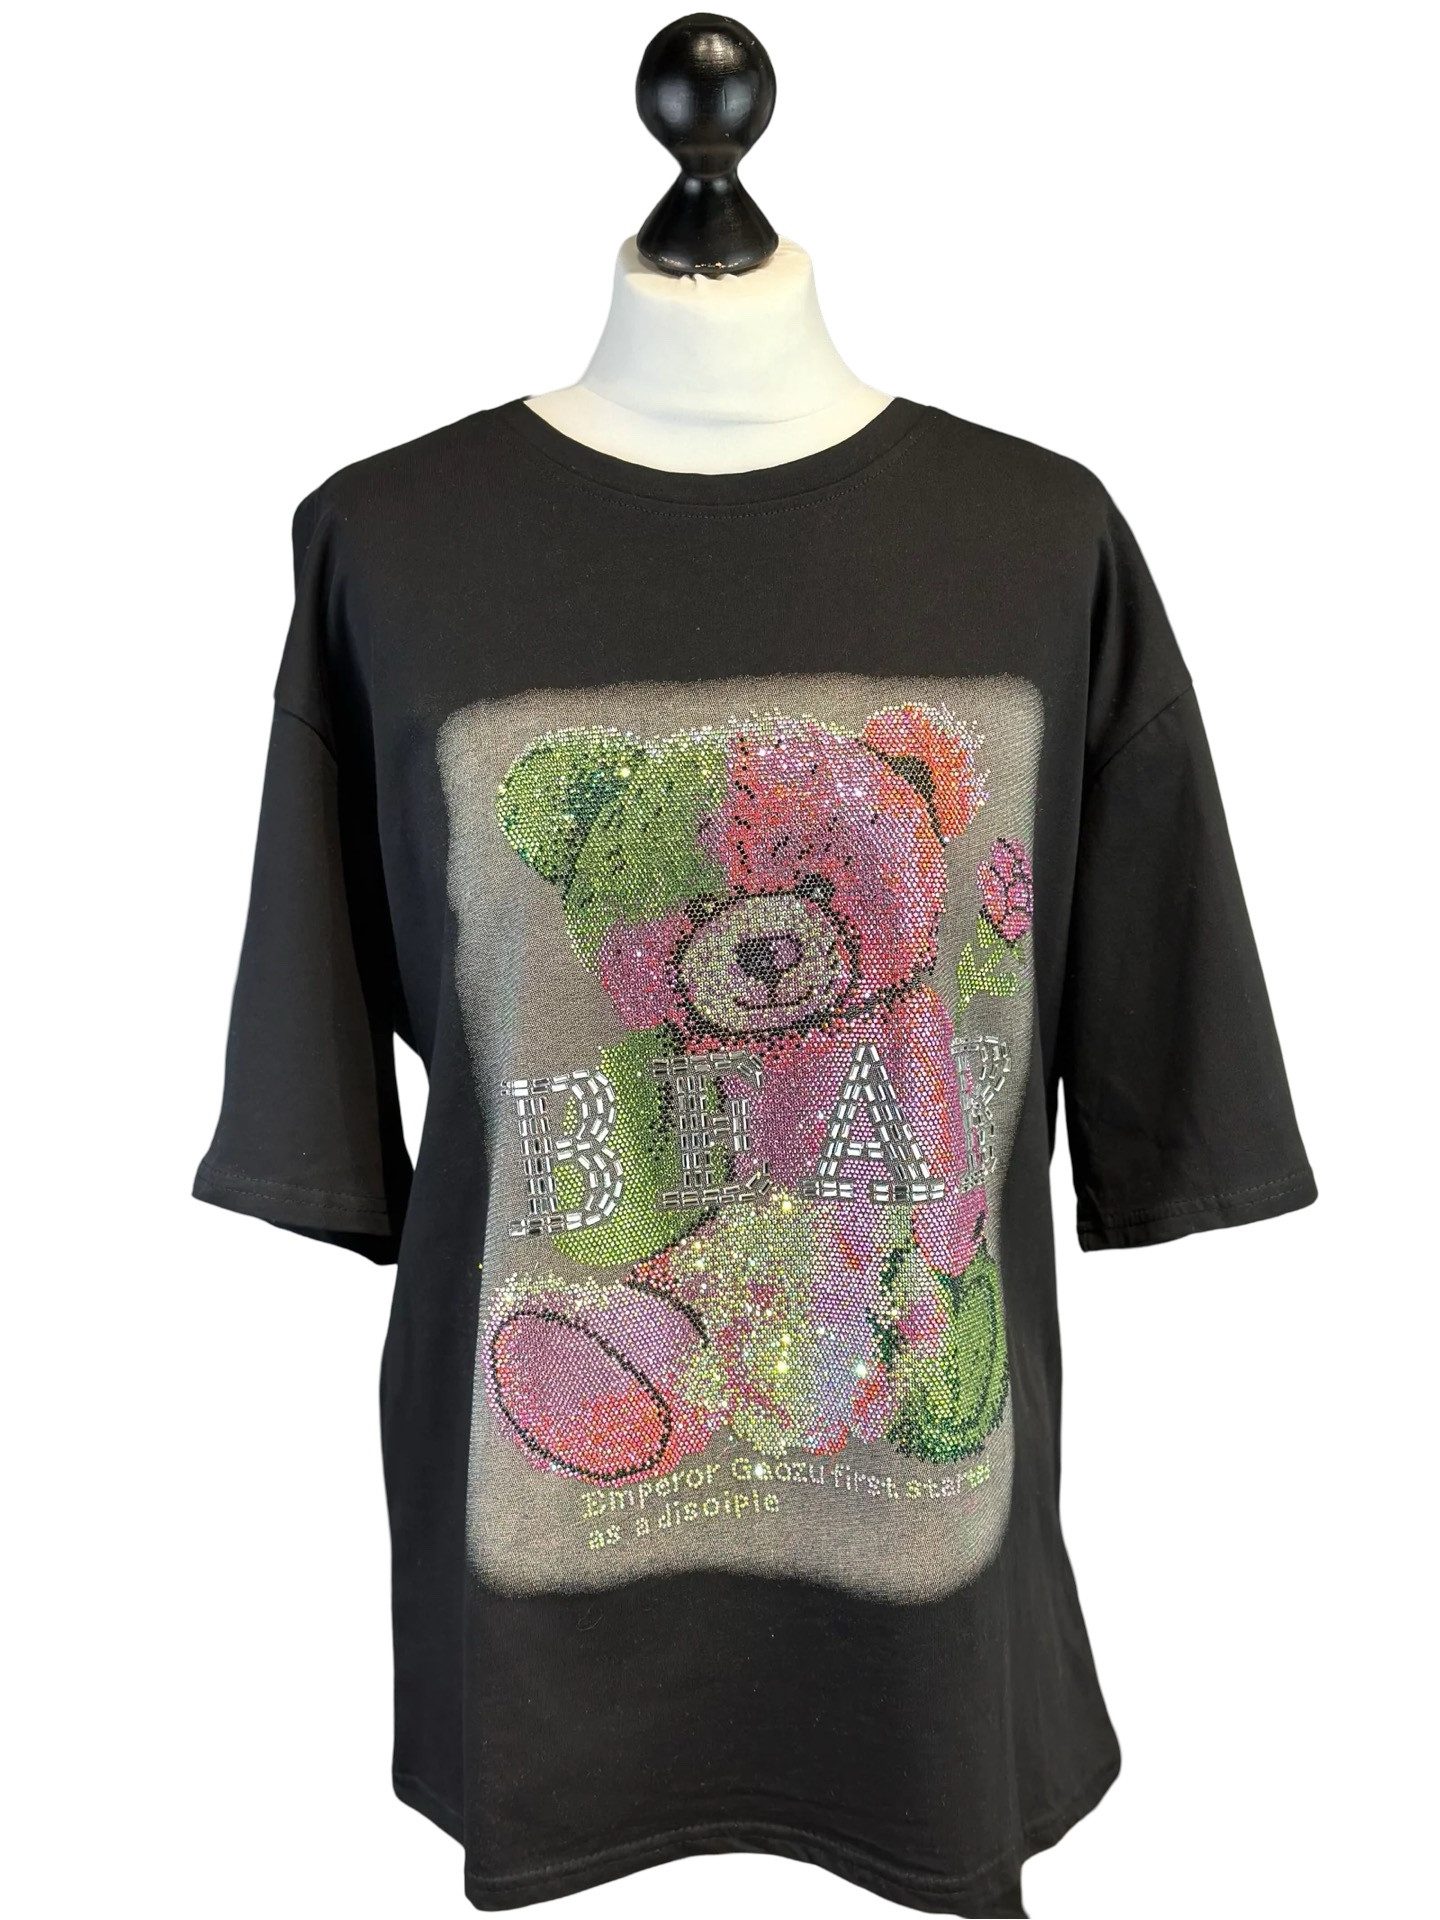 Fashion and Sports T-Shirt FaS452 T-Shirt mit Glitzer Teddy AA ca. 57 cm